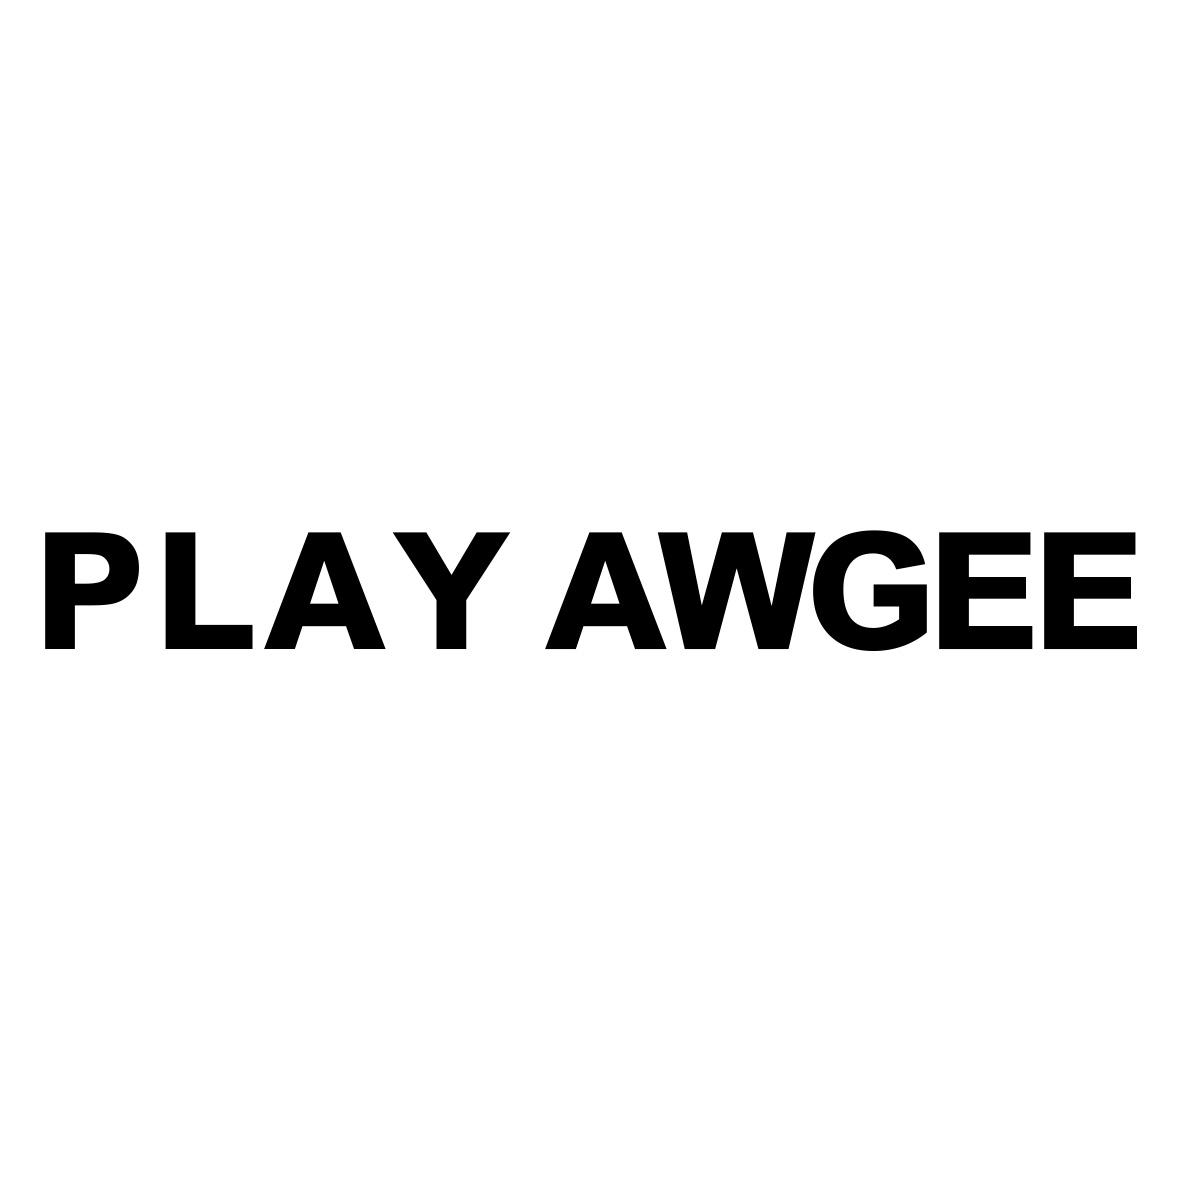 PLAY AWGEE